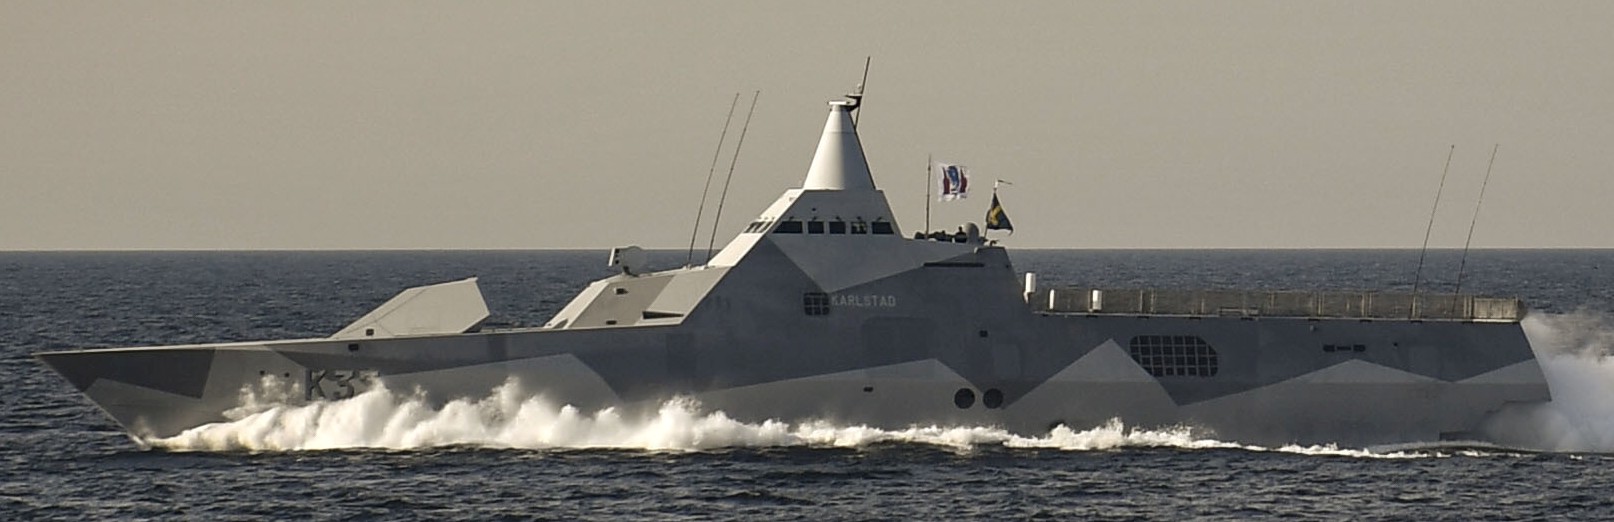 k35 hswms hms karlstad visby class corvette royal swedish navy svenska marinen 12